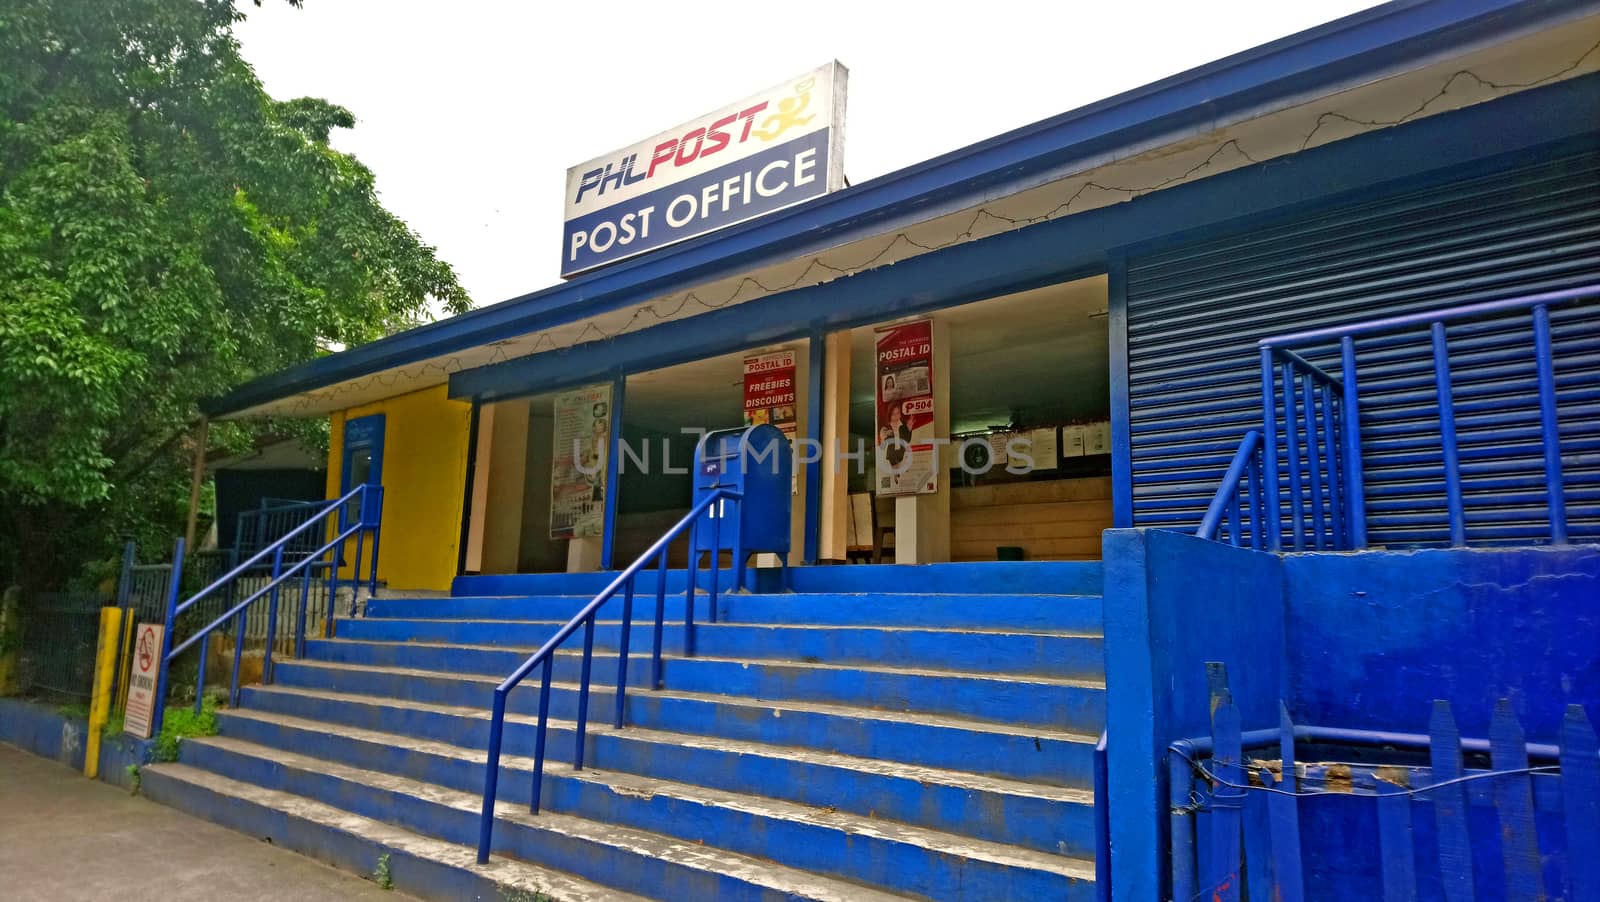 MANILA, PH - JAN 2 - PhlPost Santa Mesa branch post office facade on January 2, 2017 in Manila, Philippines.